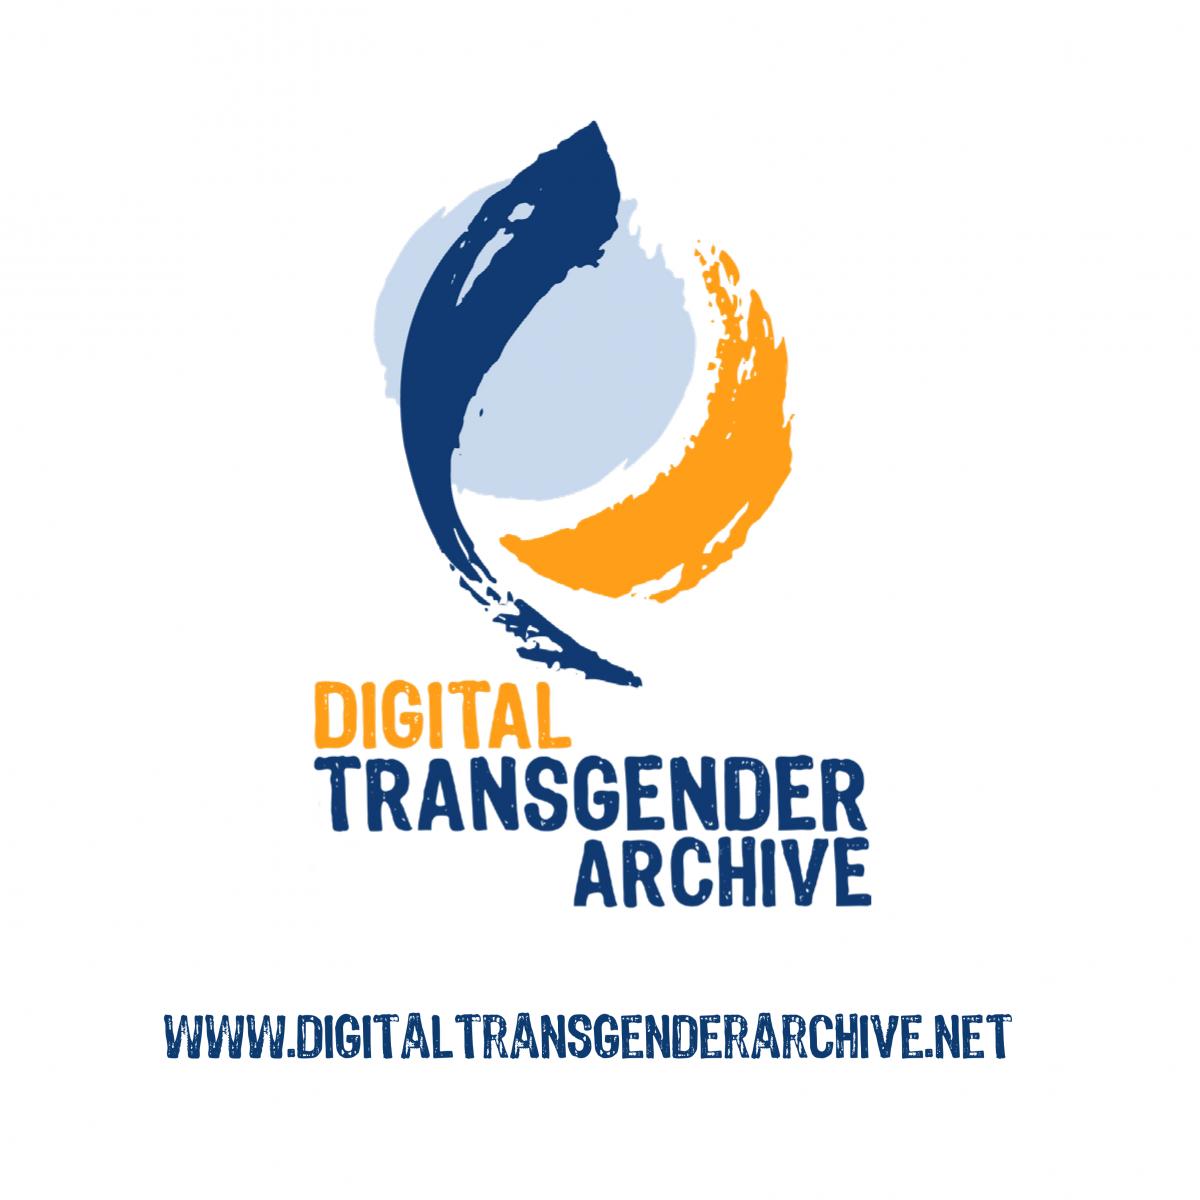 Digital Transgender Archive | www.digitaltransgenderarchive.net